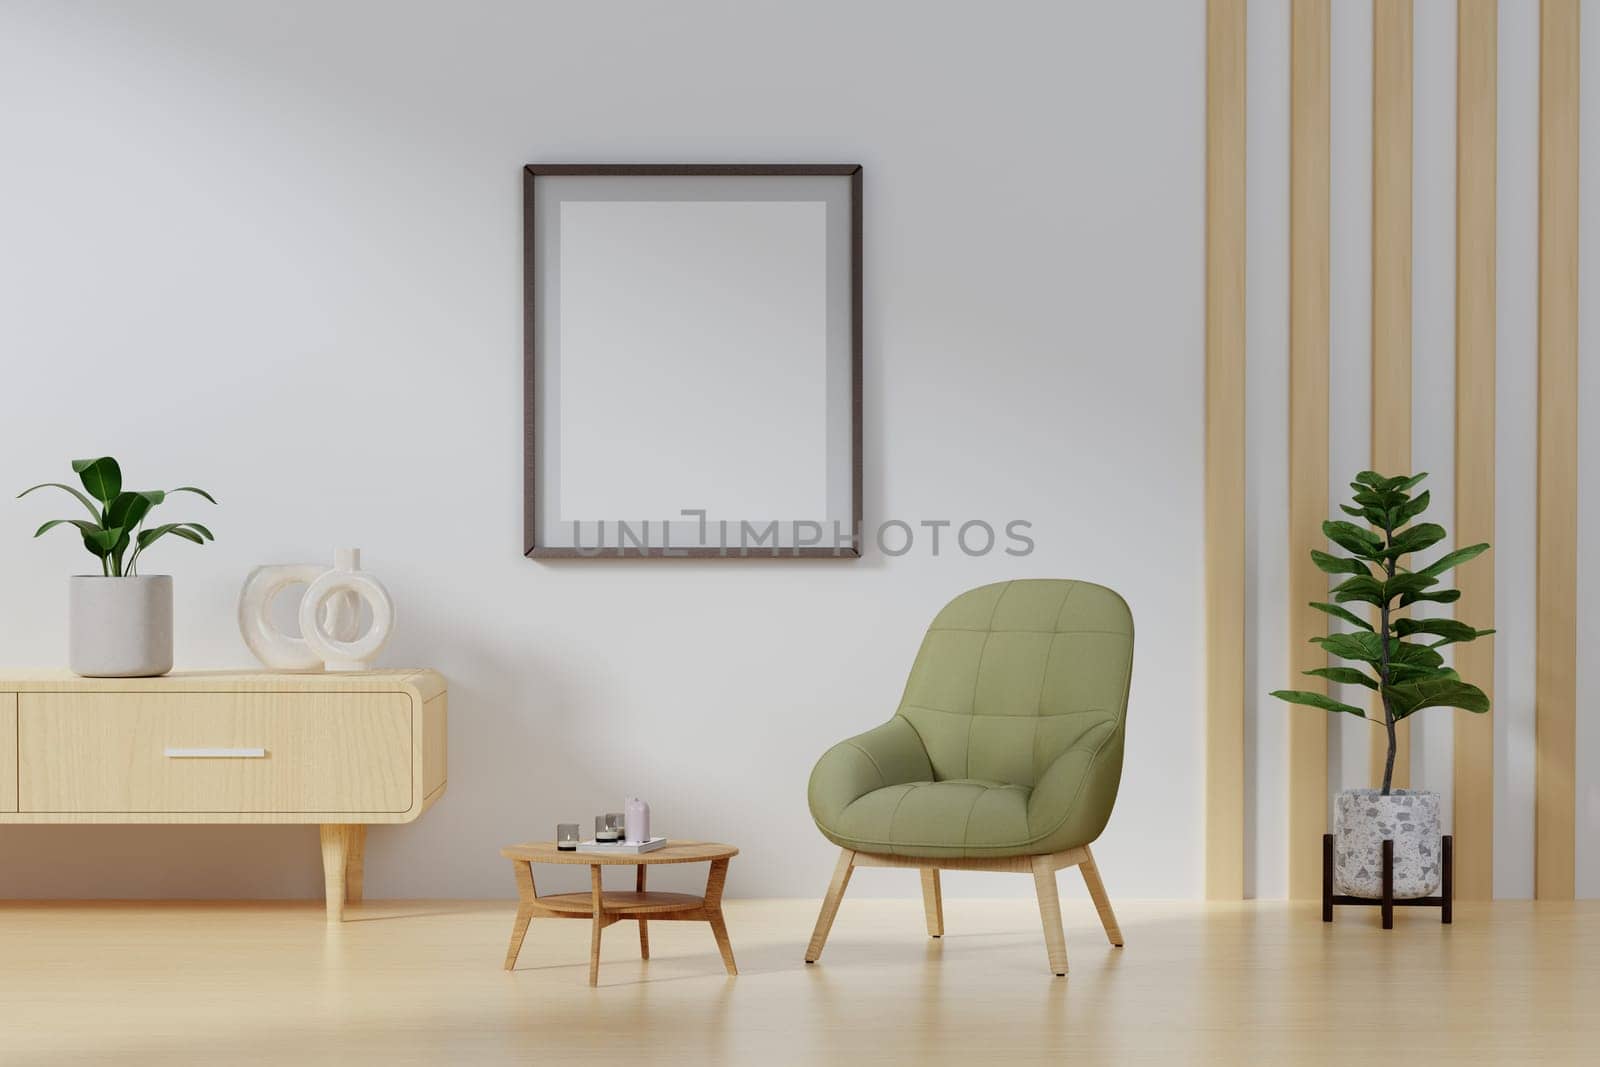 Blank vertical poster frame mock up in living room interior, modern living room interior background, green sofa. 3d rendering illustration.